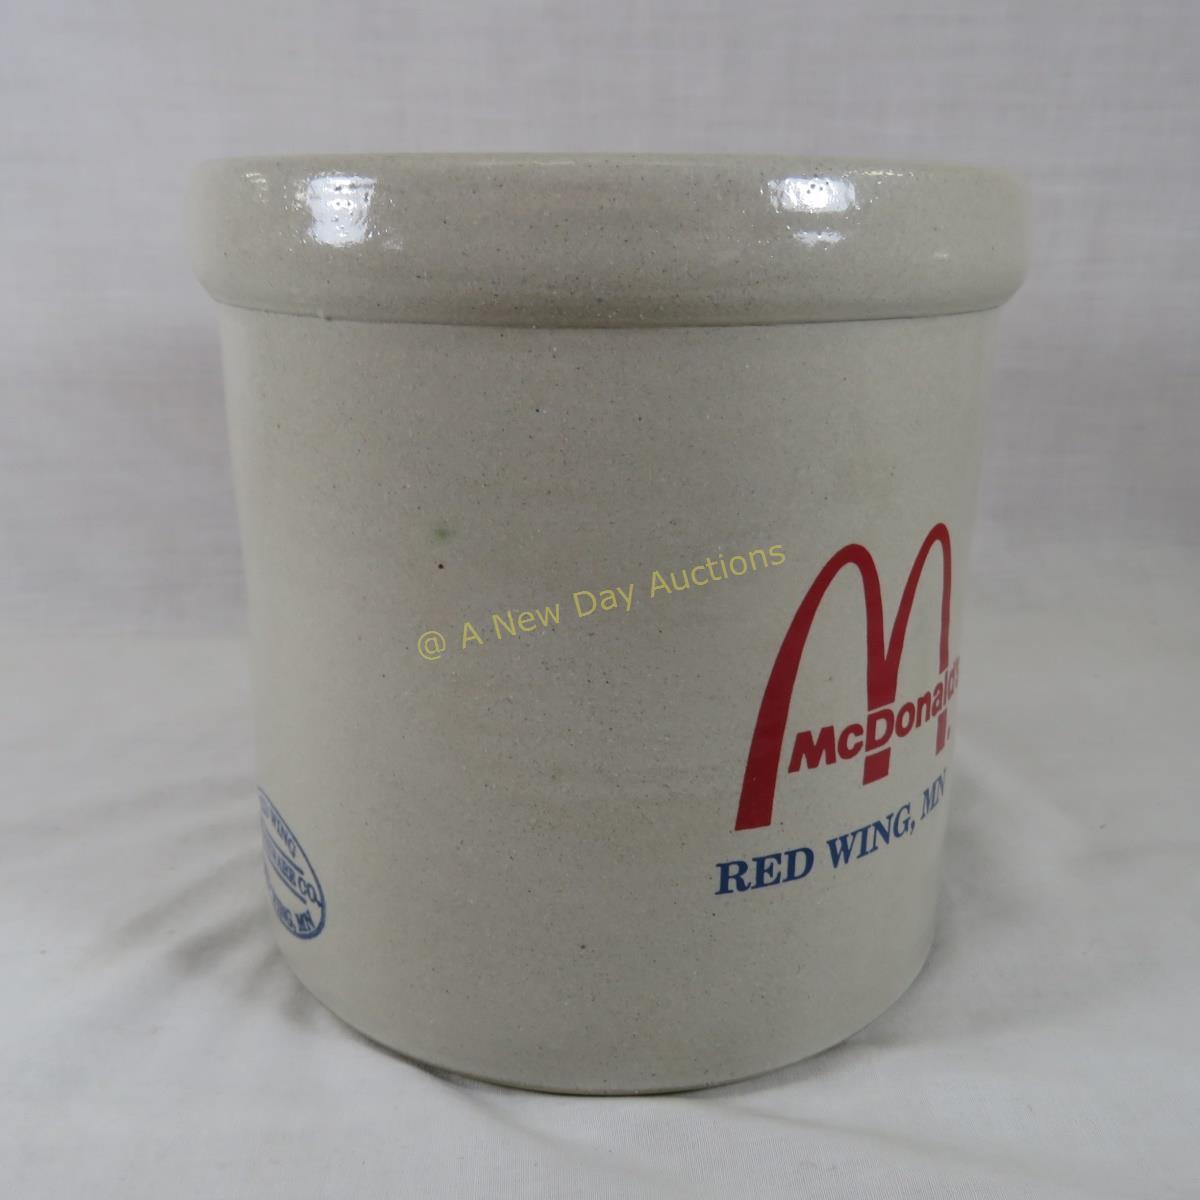 1996 McDonalds Hamburgler Red Wing Crock